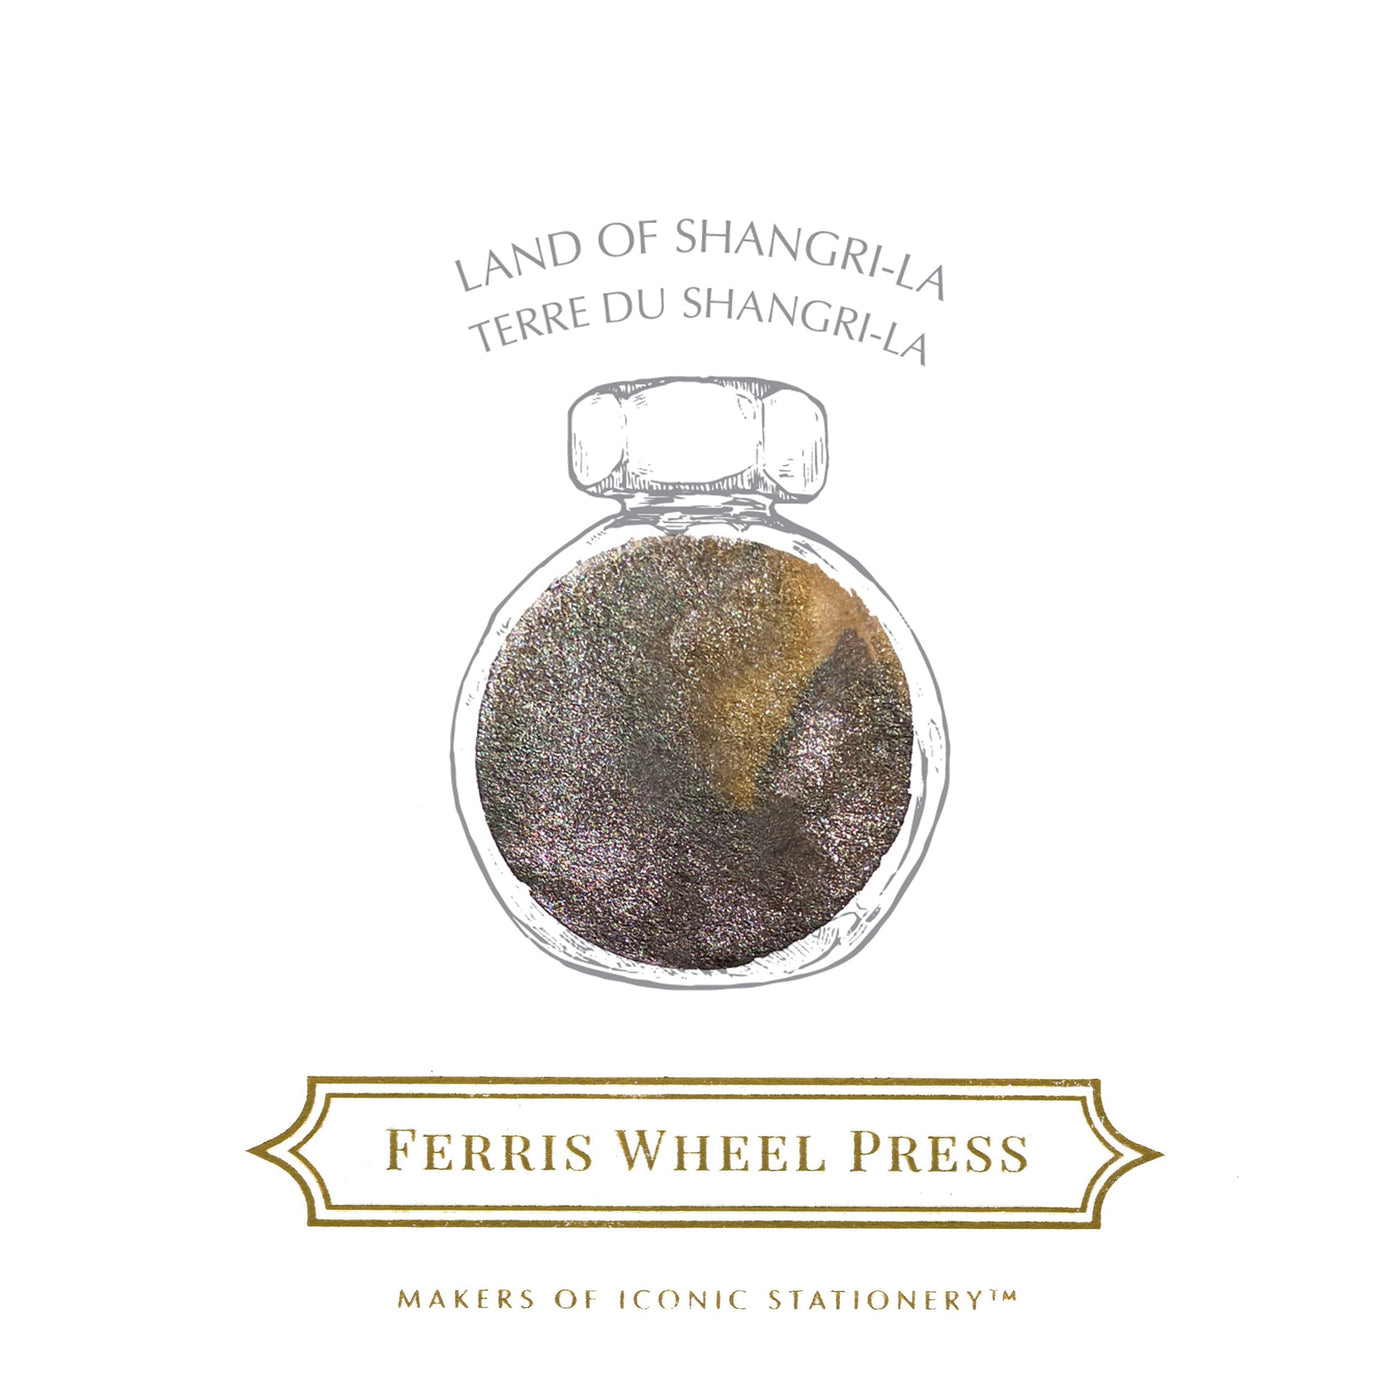 Ferris Wheel Press 38ml bottled Ink - Land of Shangri-La